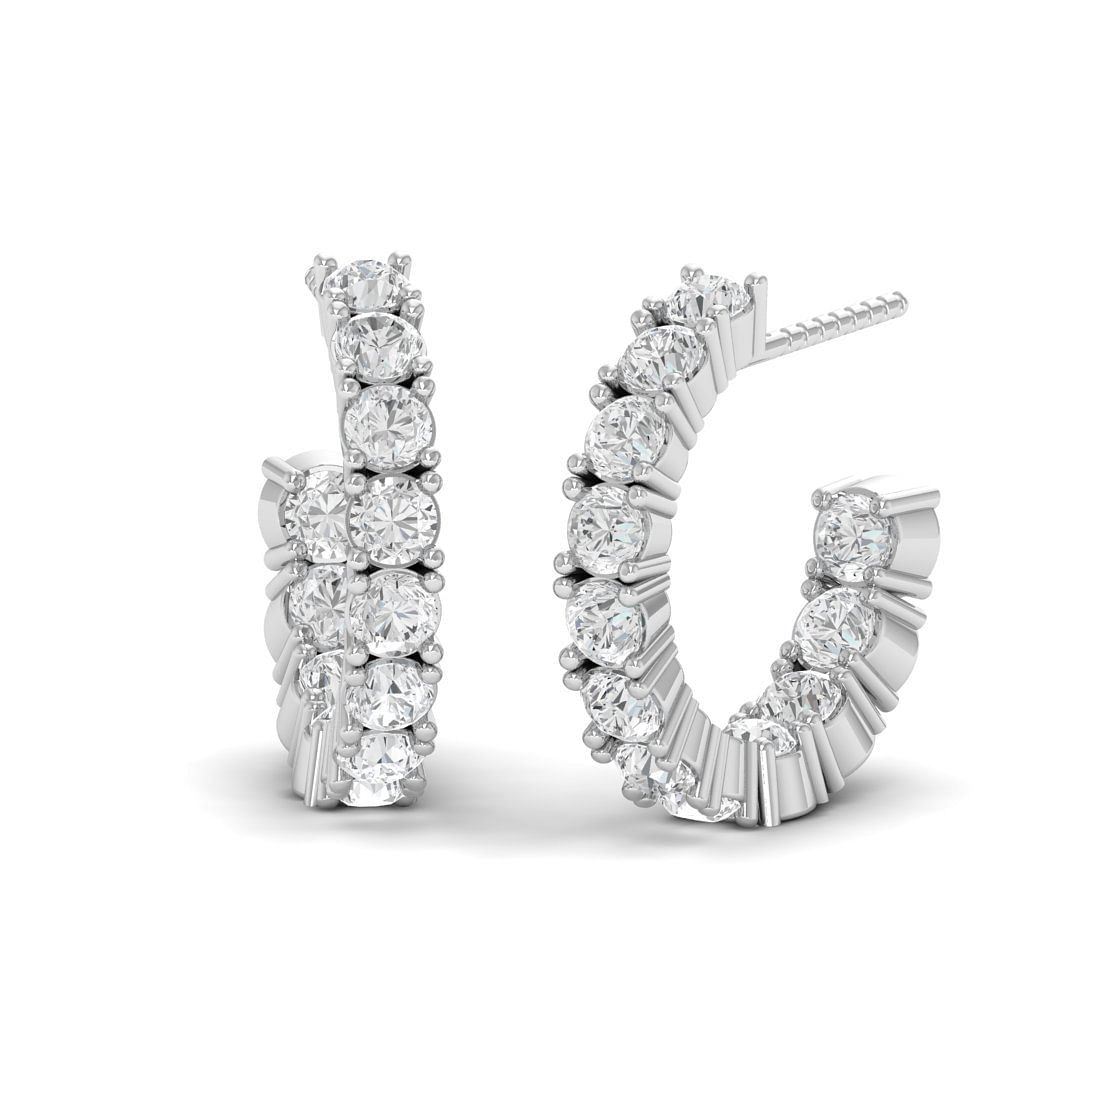 10k White Gold Aris Diamond Stud Earrings for daily wear